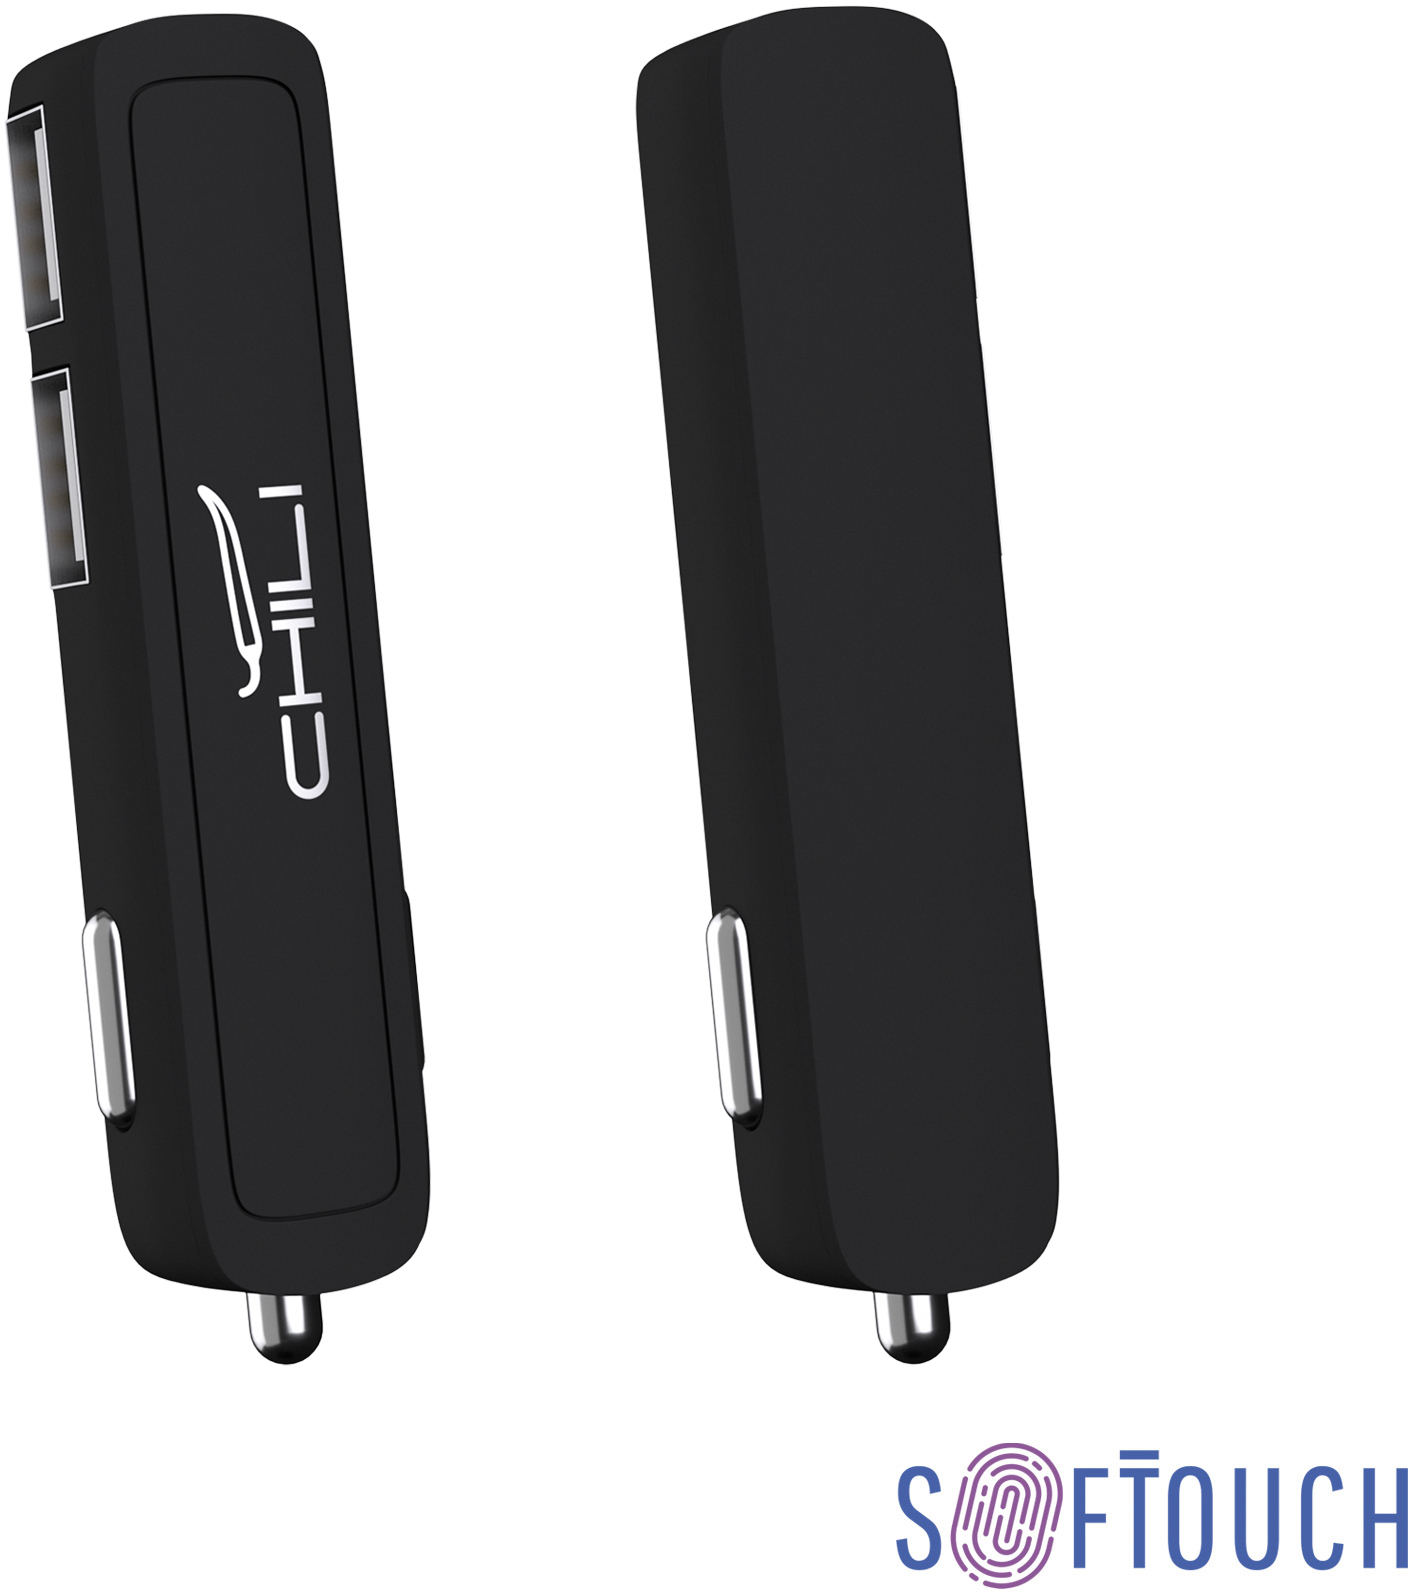 Артикул: E6912-3 — Автомобильное зарядное устройство "Slam" с 2-мя разъёмами USB, покрытие soft touch